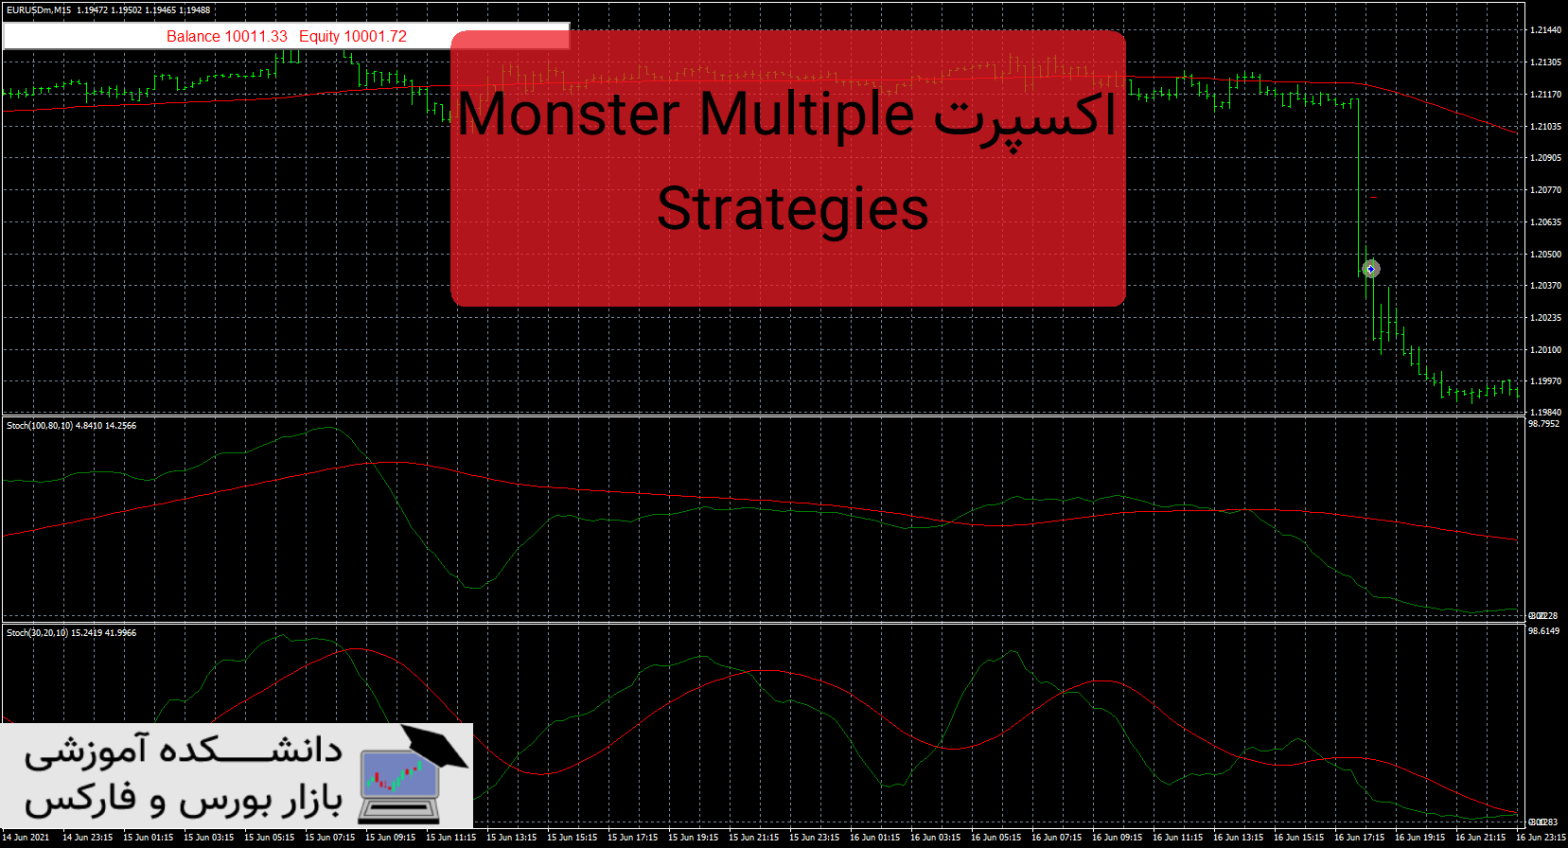 Monster Multiple Strategies دانلود و معرفی اکسپرت